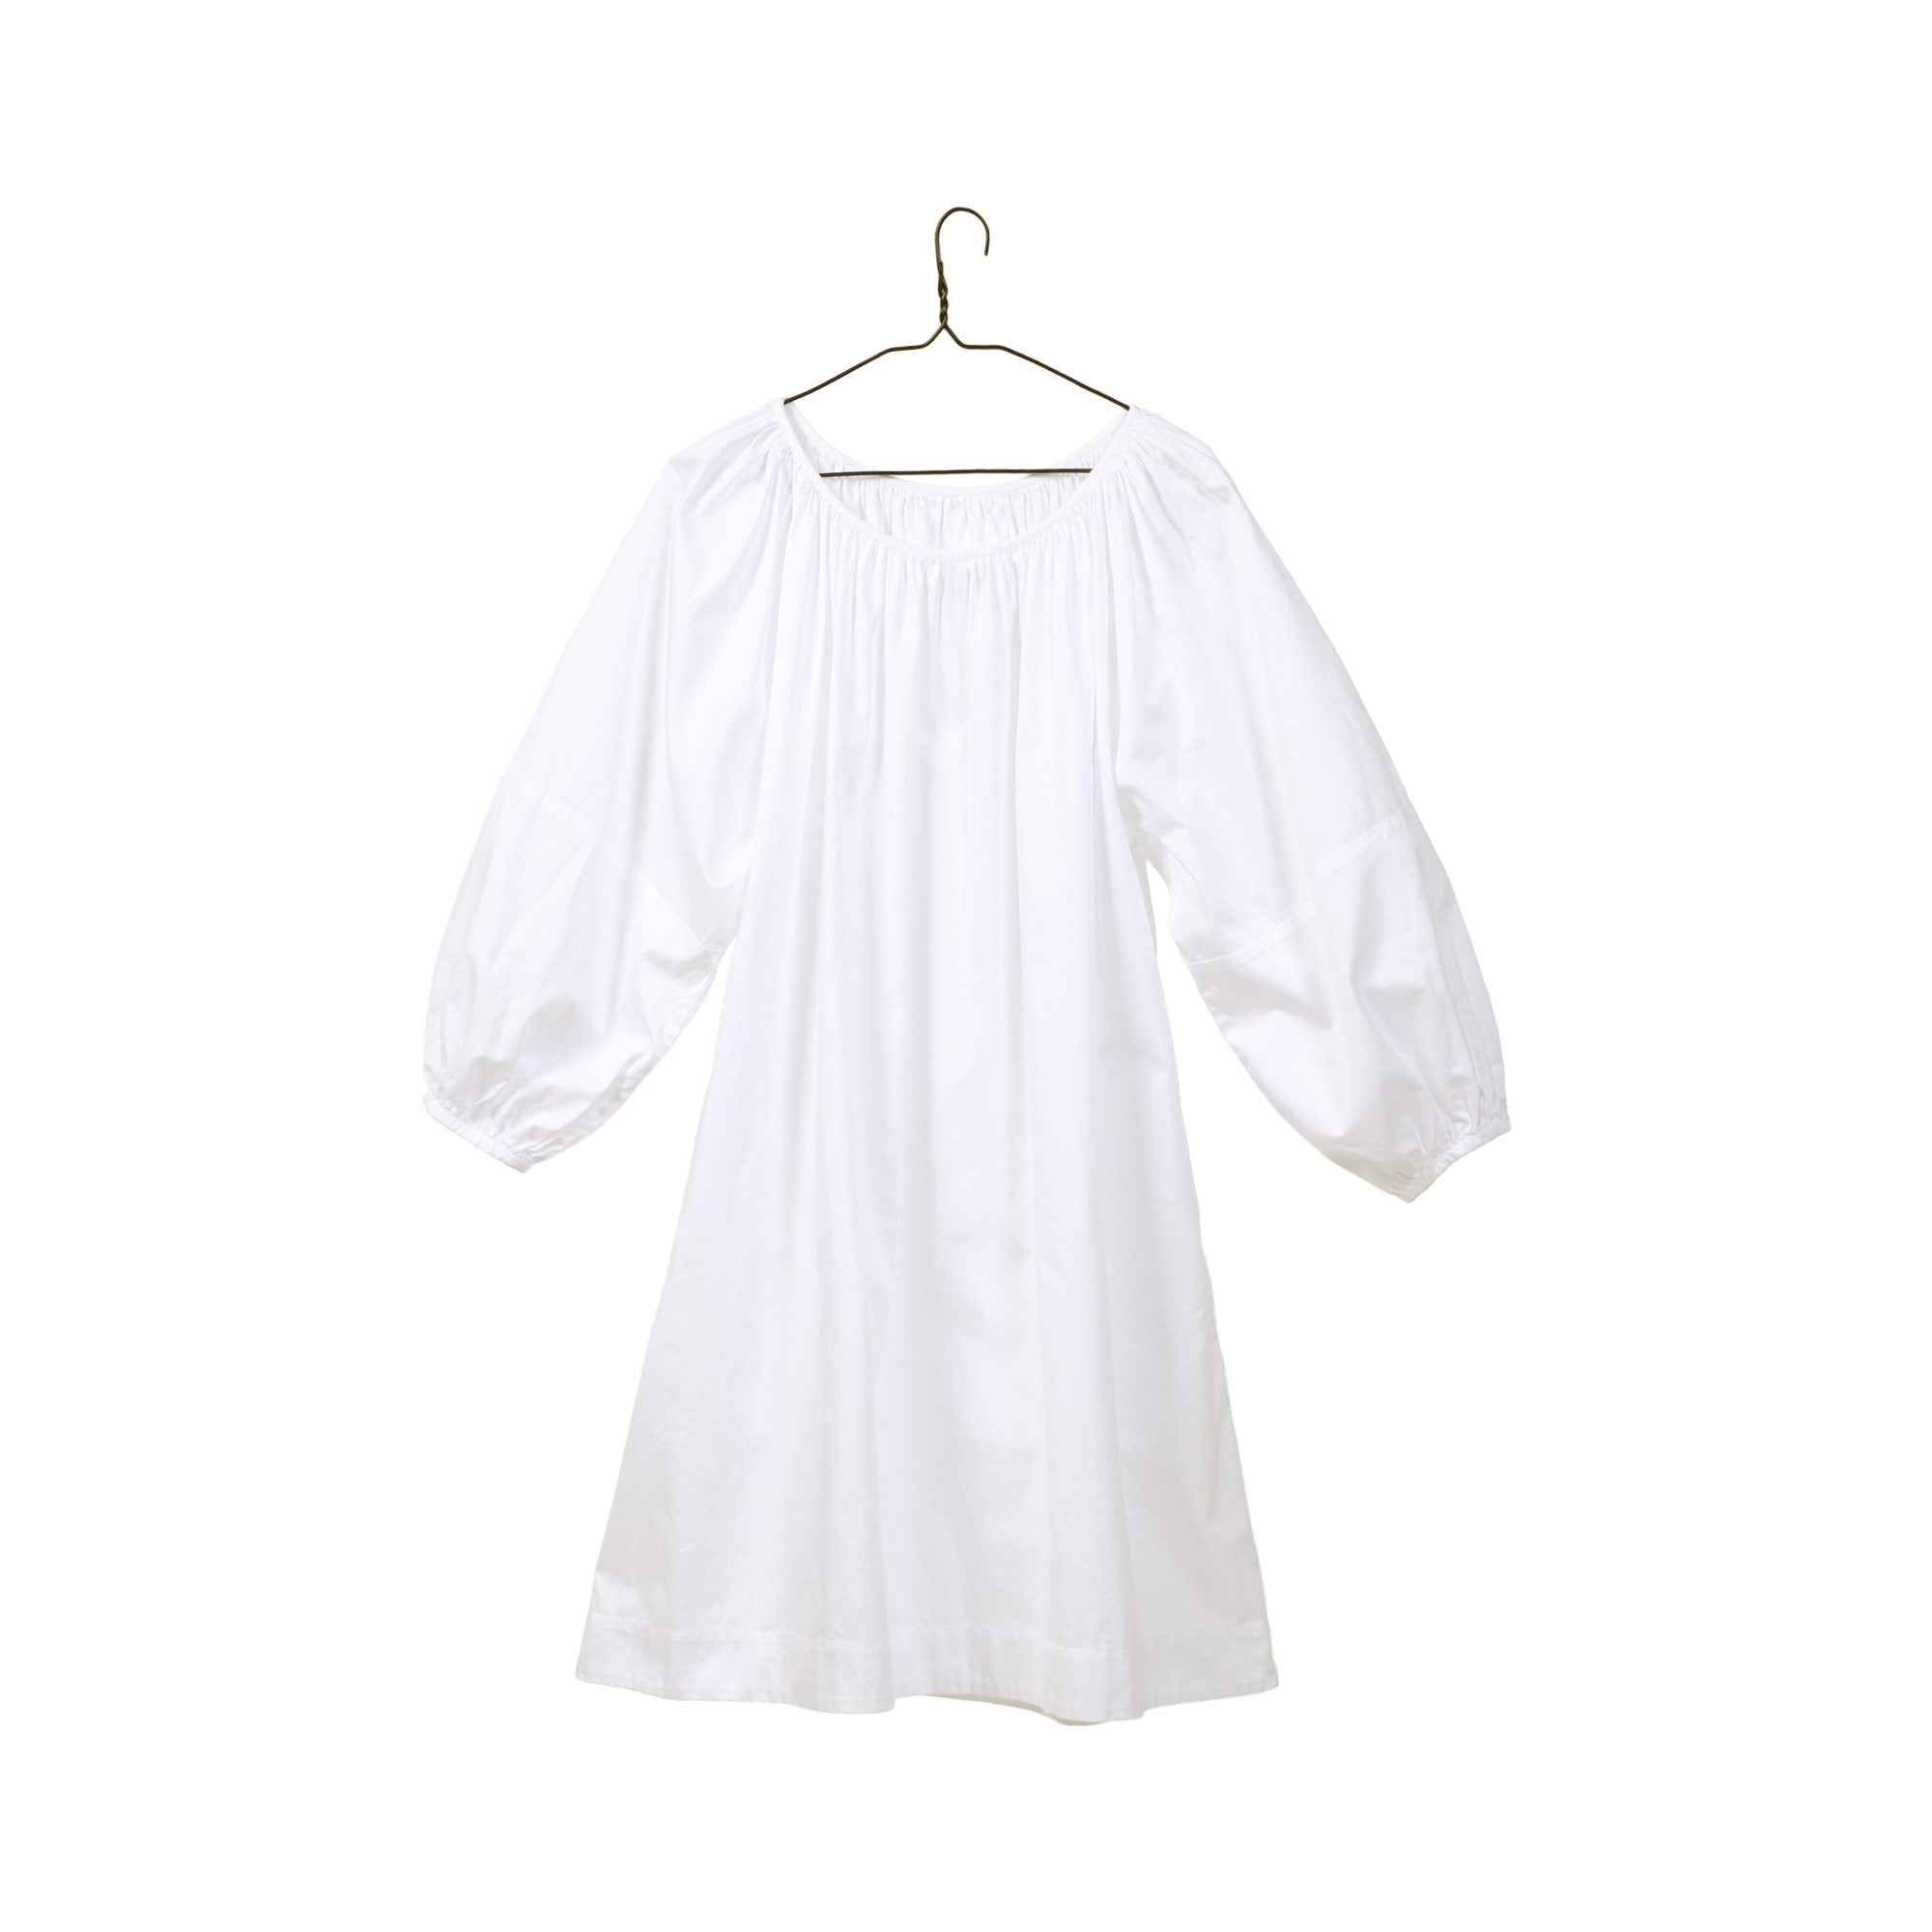 Future_Primitive_x_Choix_White_Collette_dress